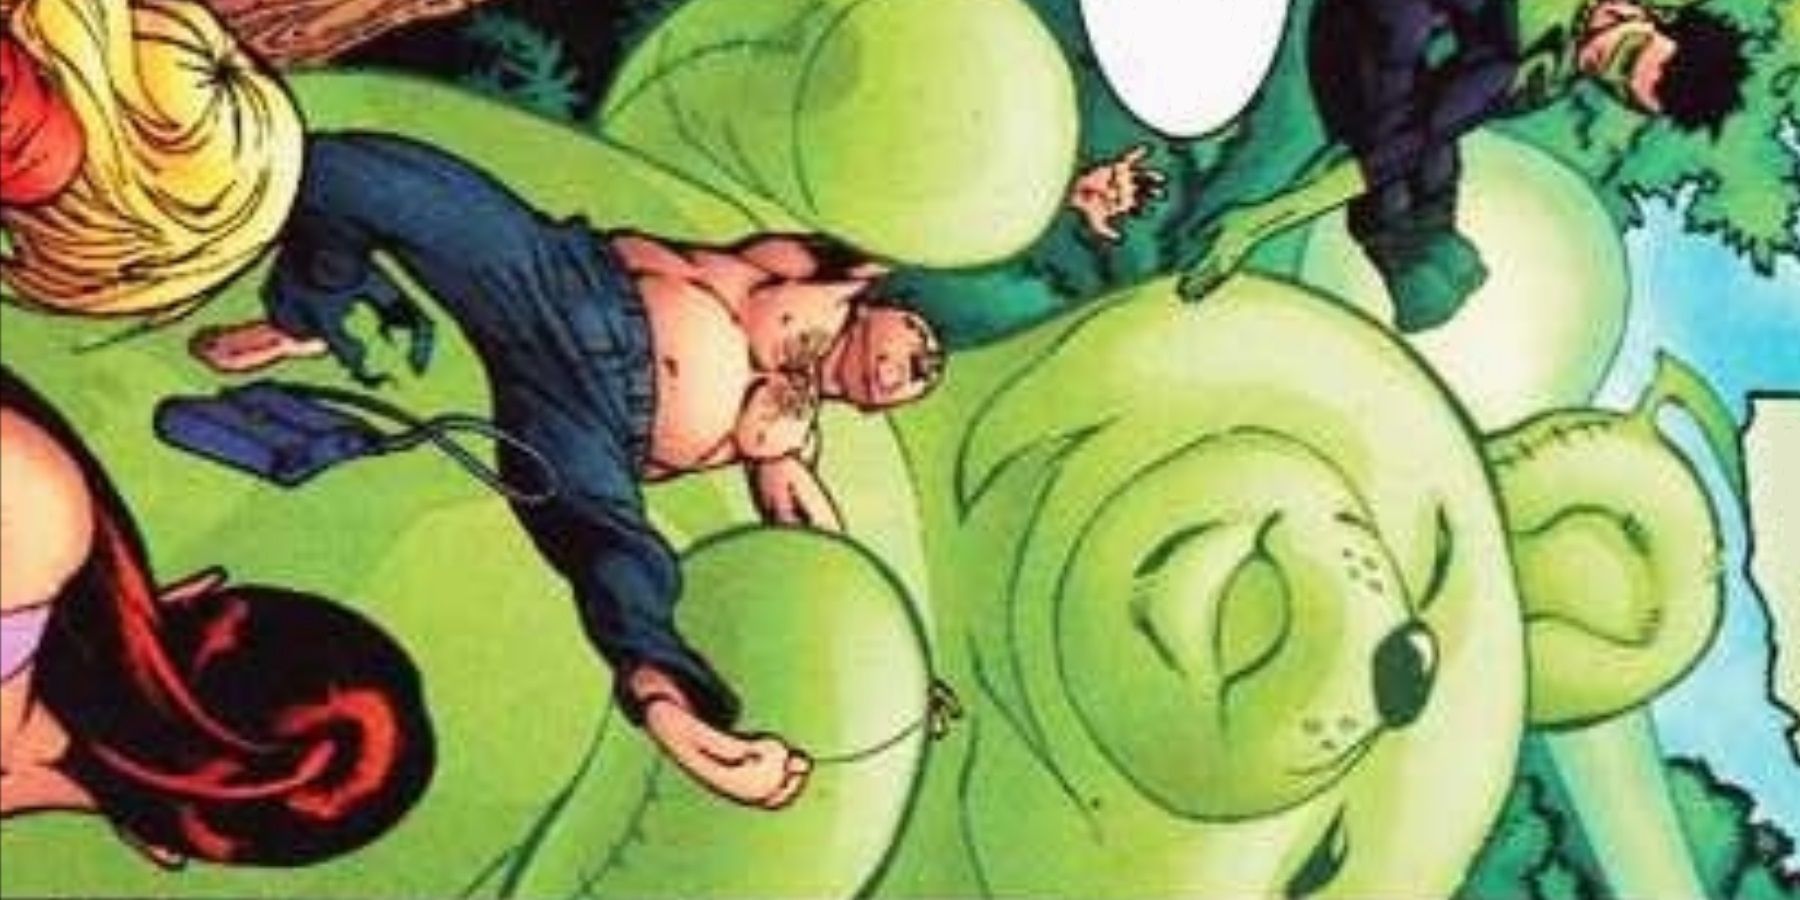 Green Lantern Construct Giant Teddy Bear